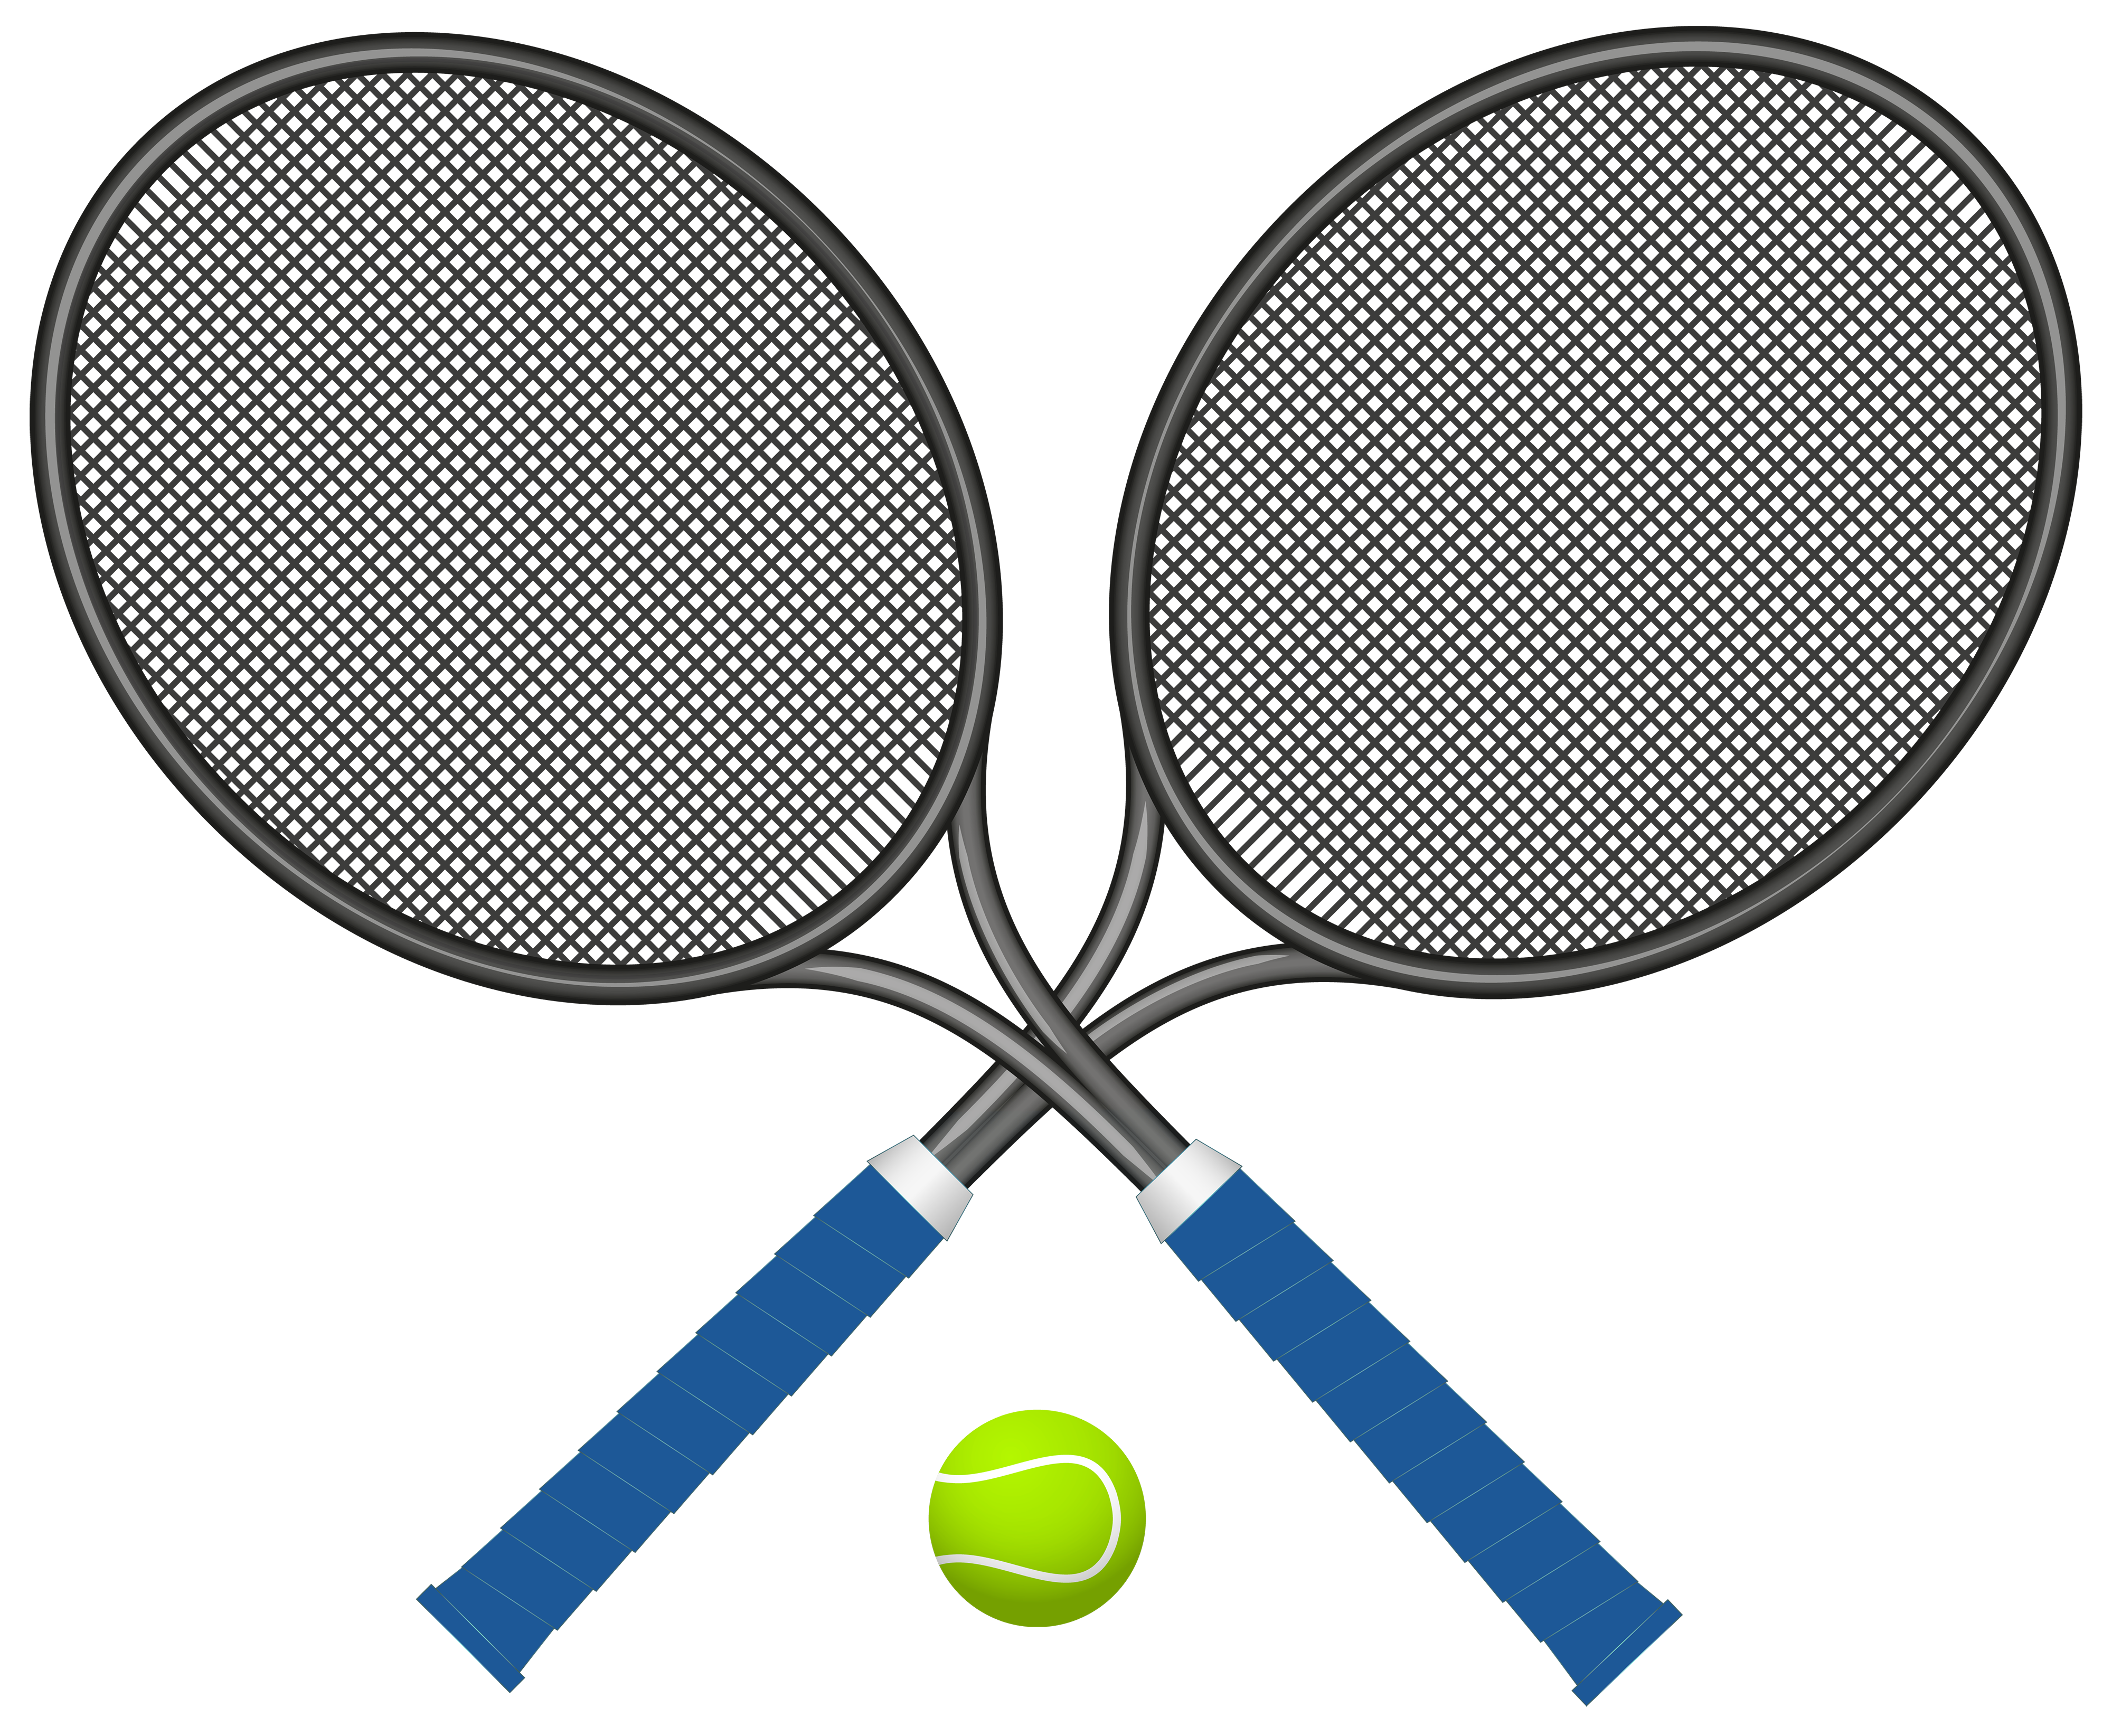 free vector tennis clipart - photo #19